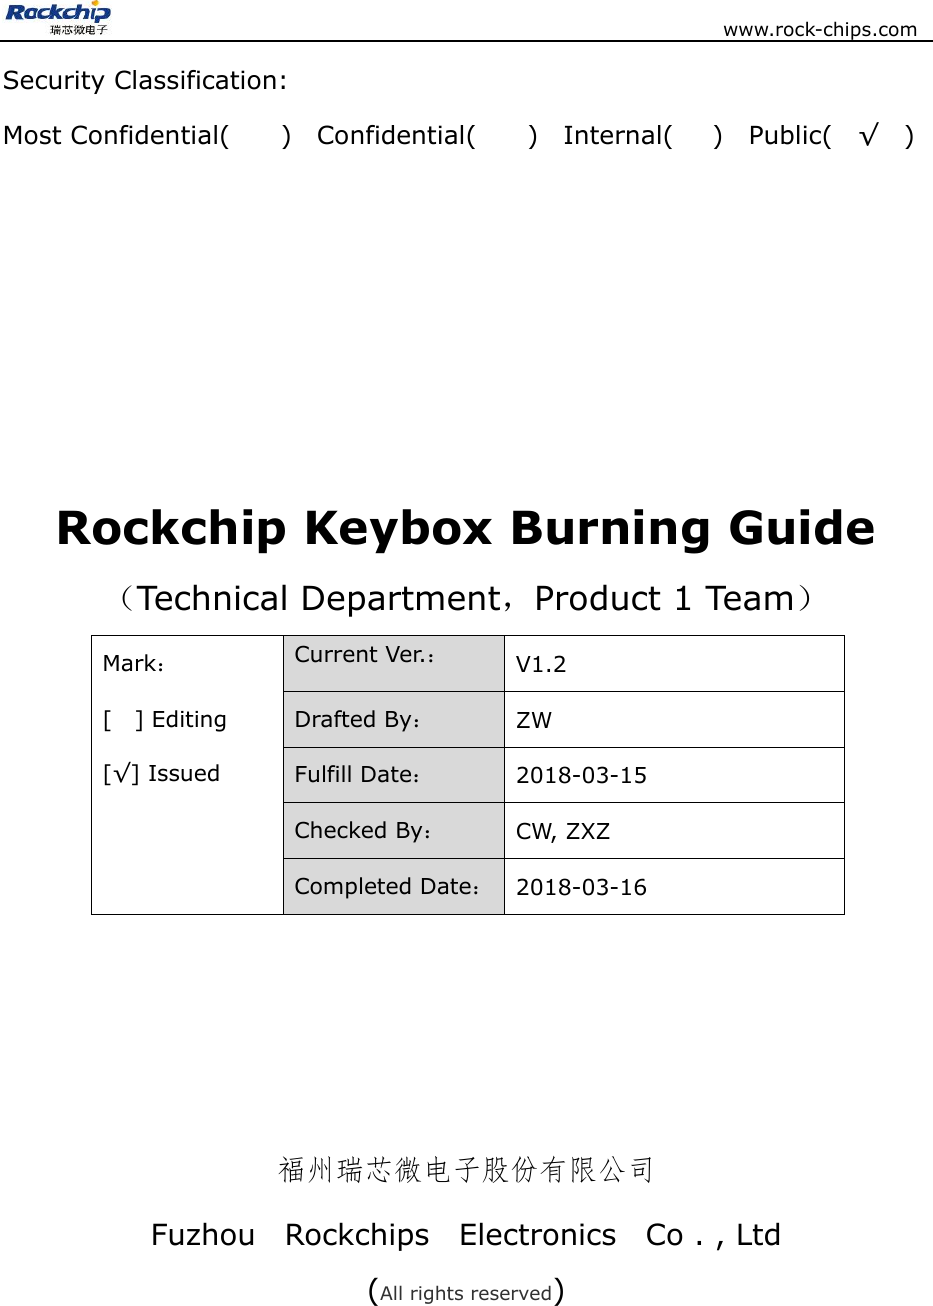 Page 1 of 9 - 需求规格说明书 Rockchip Keybox Burning Guide V1.2-20180315